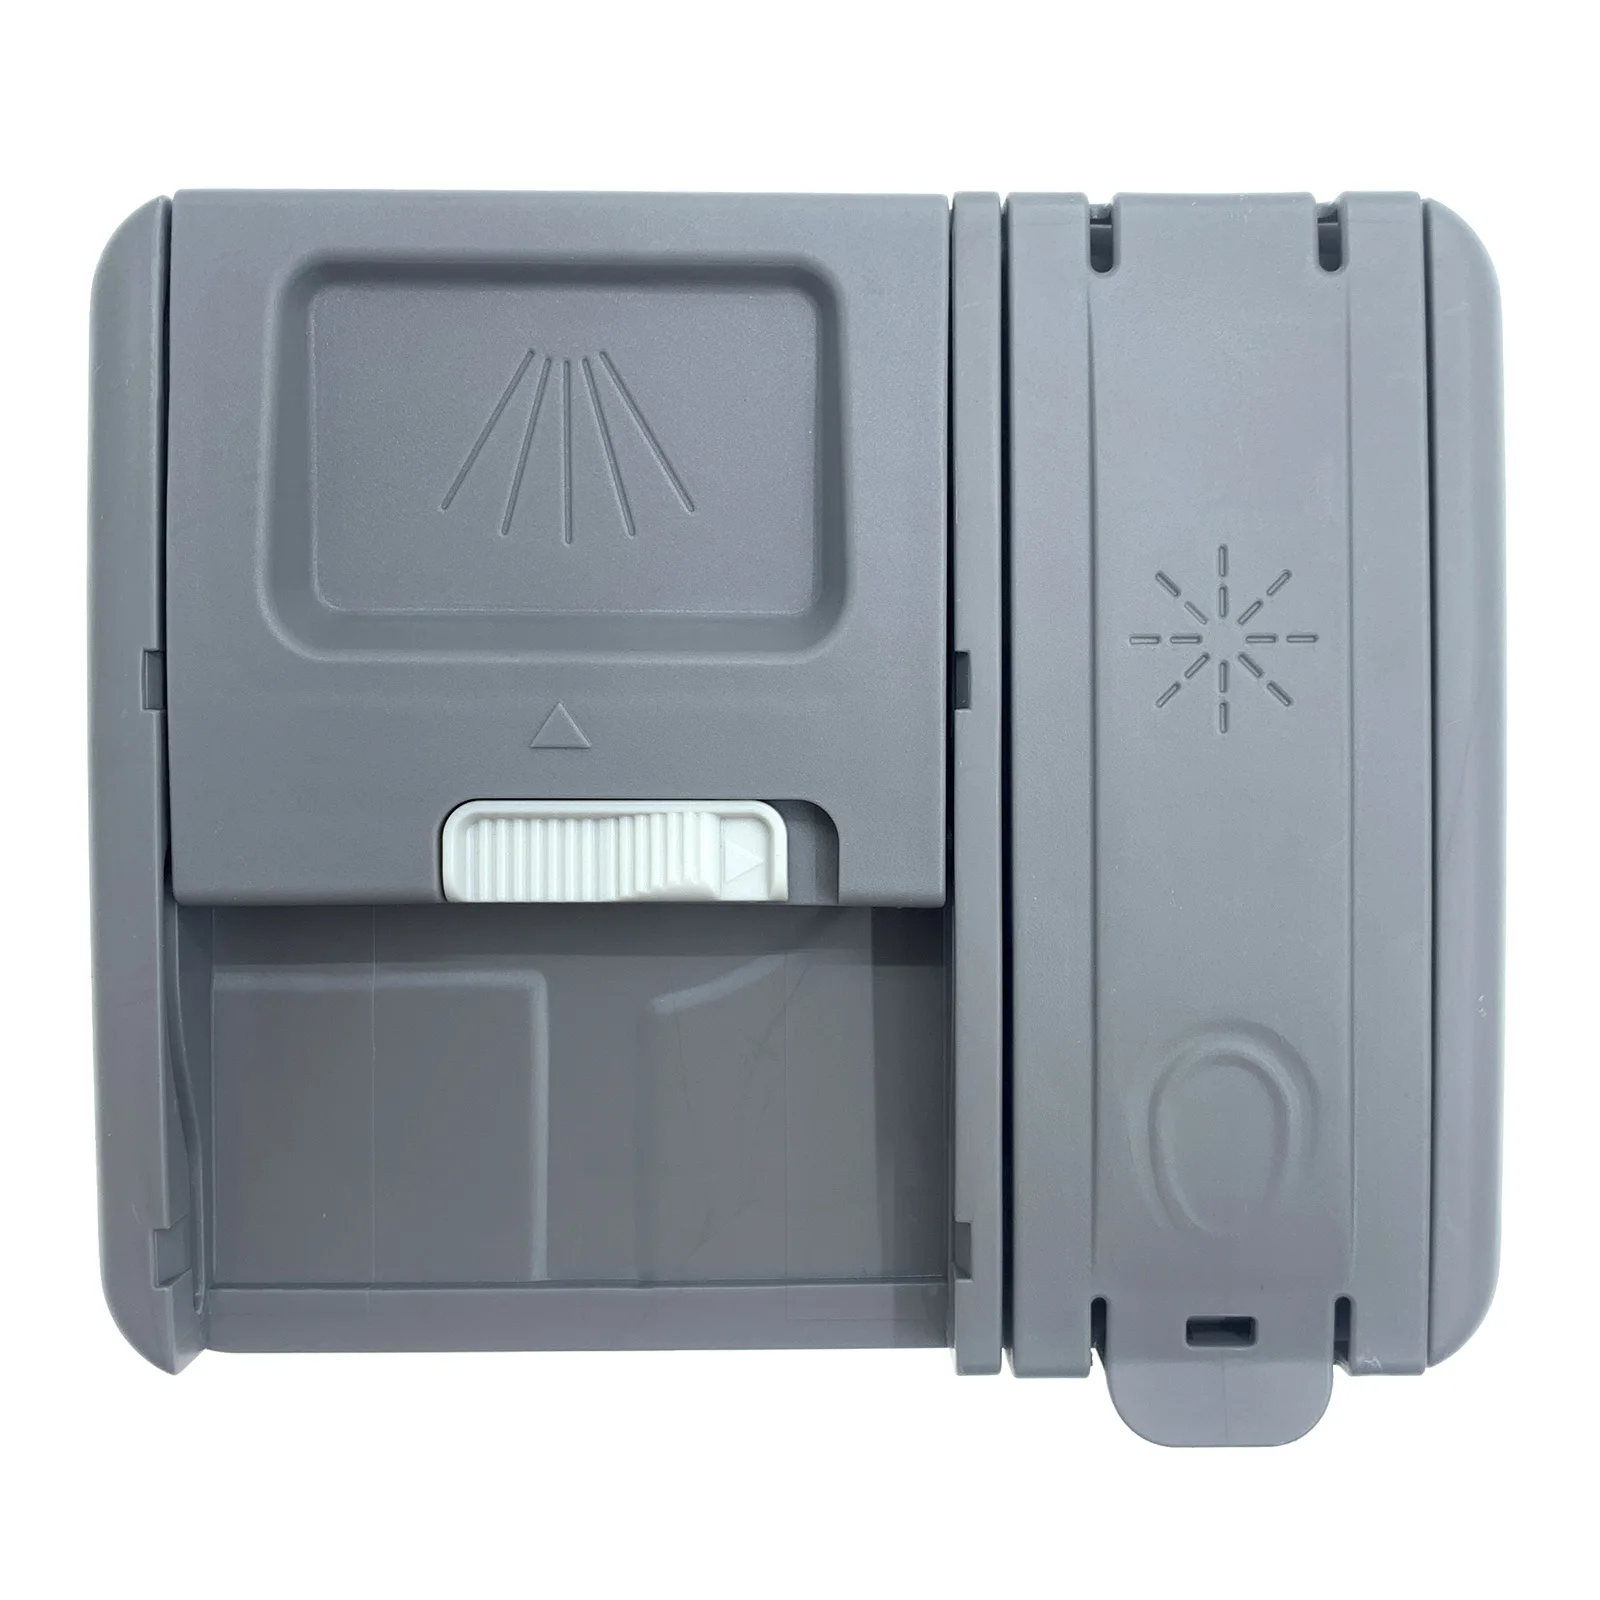 

SAIPU SP-D02B 17476000008523 Dishwasher Parts Detergent Dispenser Assembly for Midea Hansa Gorenje Korting Leran 220-240V